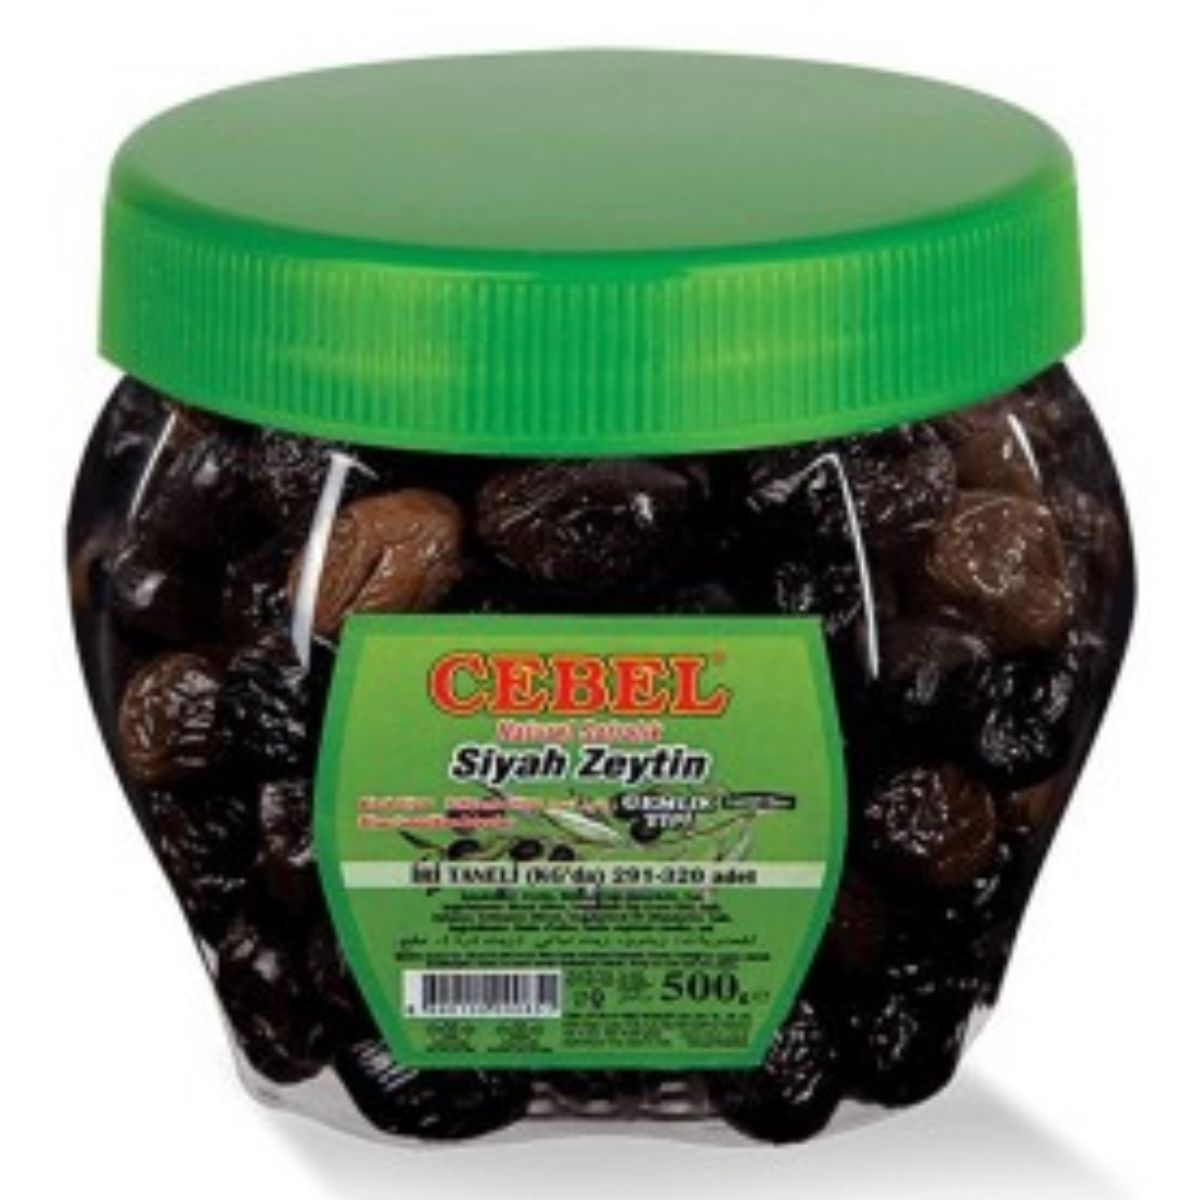 A jar of Cebel - Black Olives Coarse Grain - 500g in a green jar.